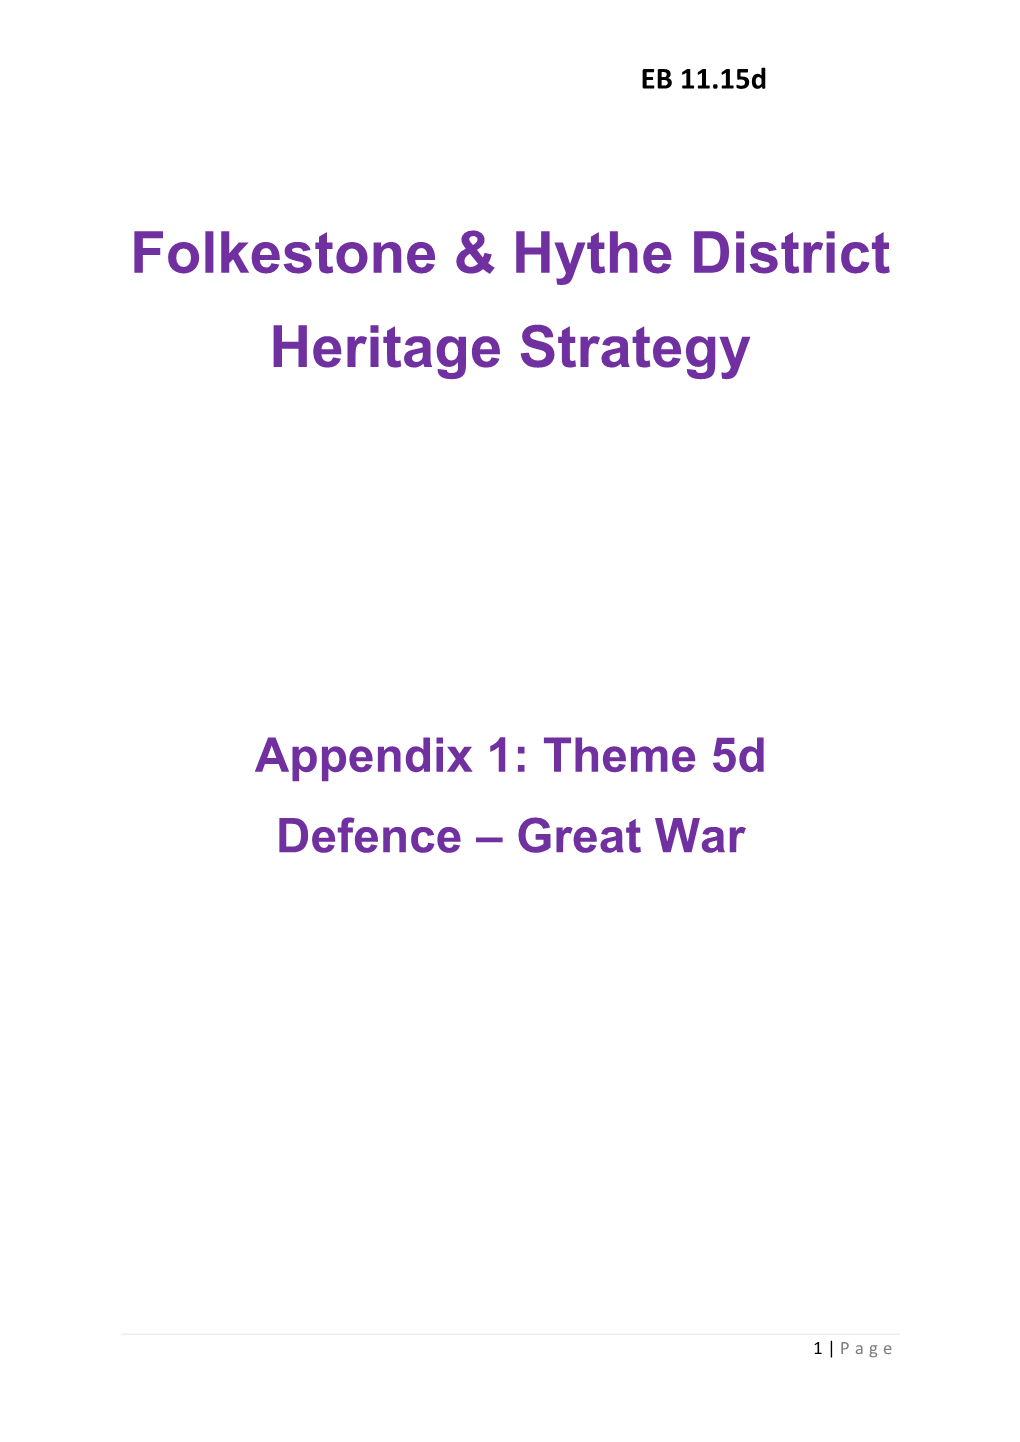 Folkestone & Hythe District Heritage Strategy